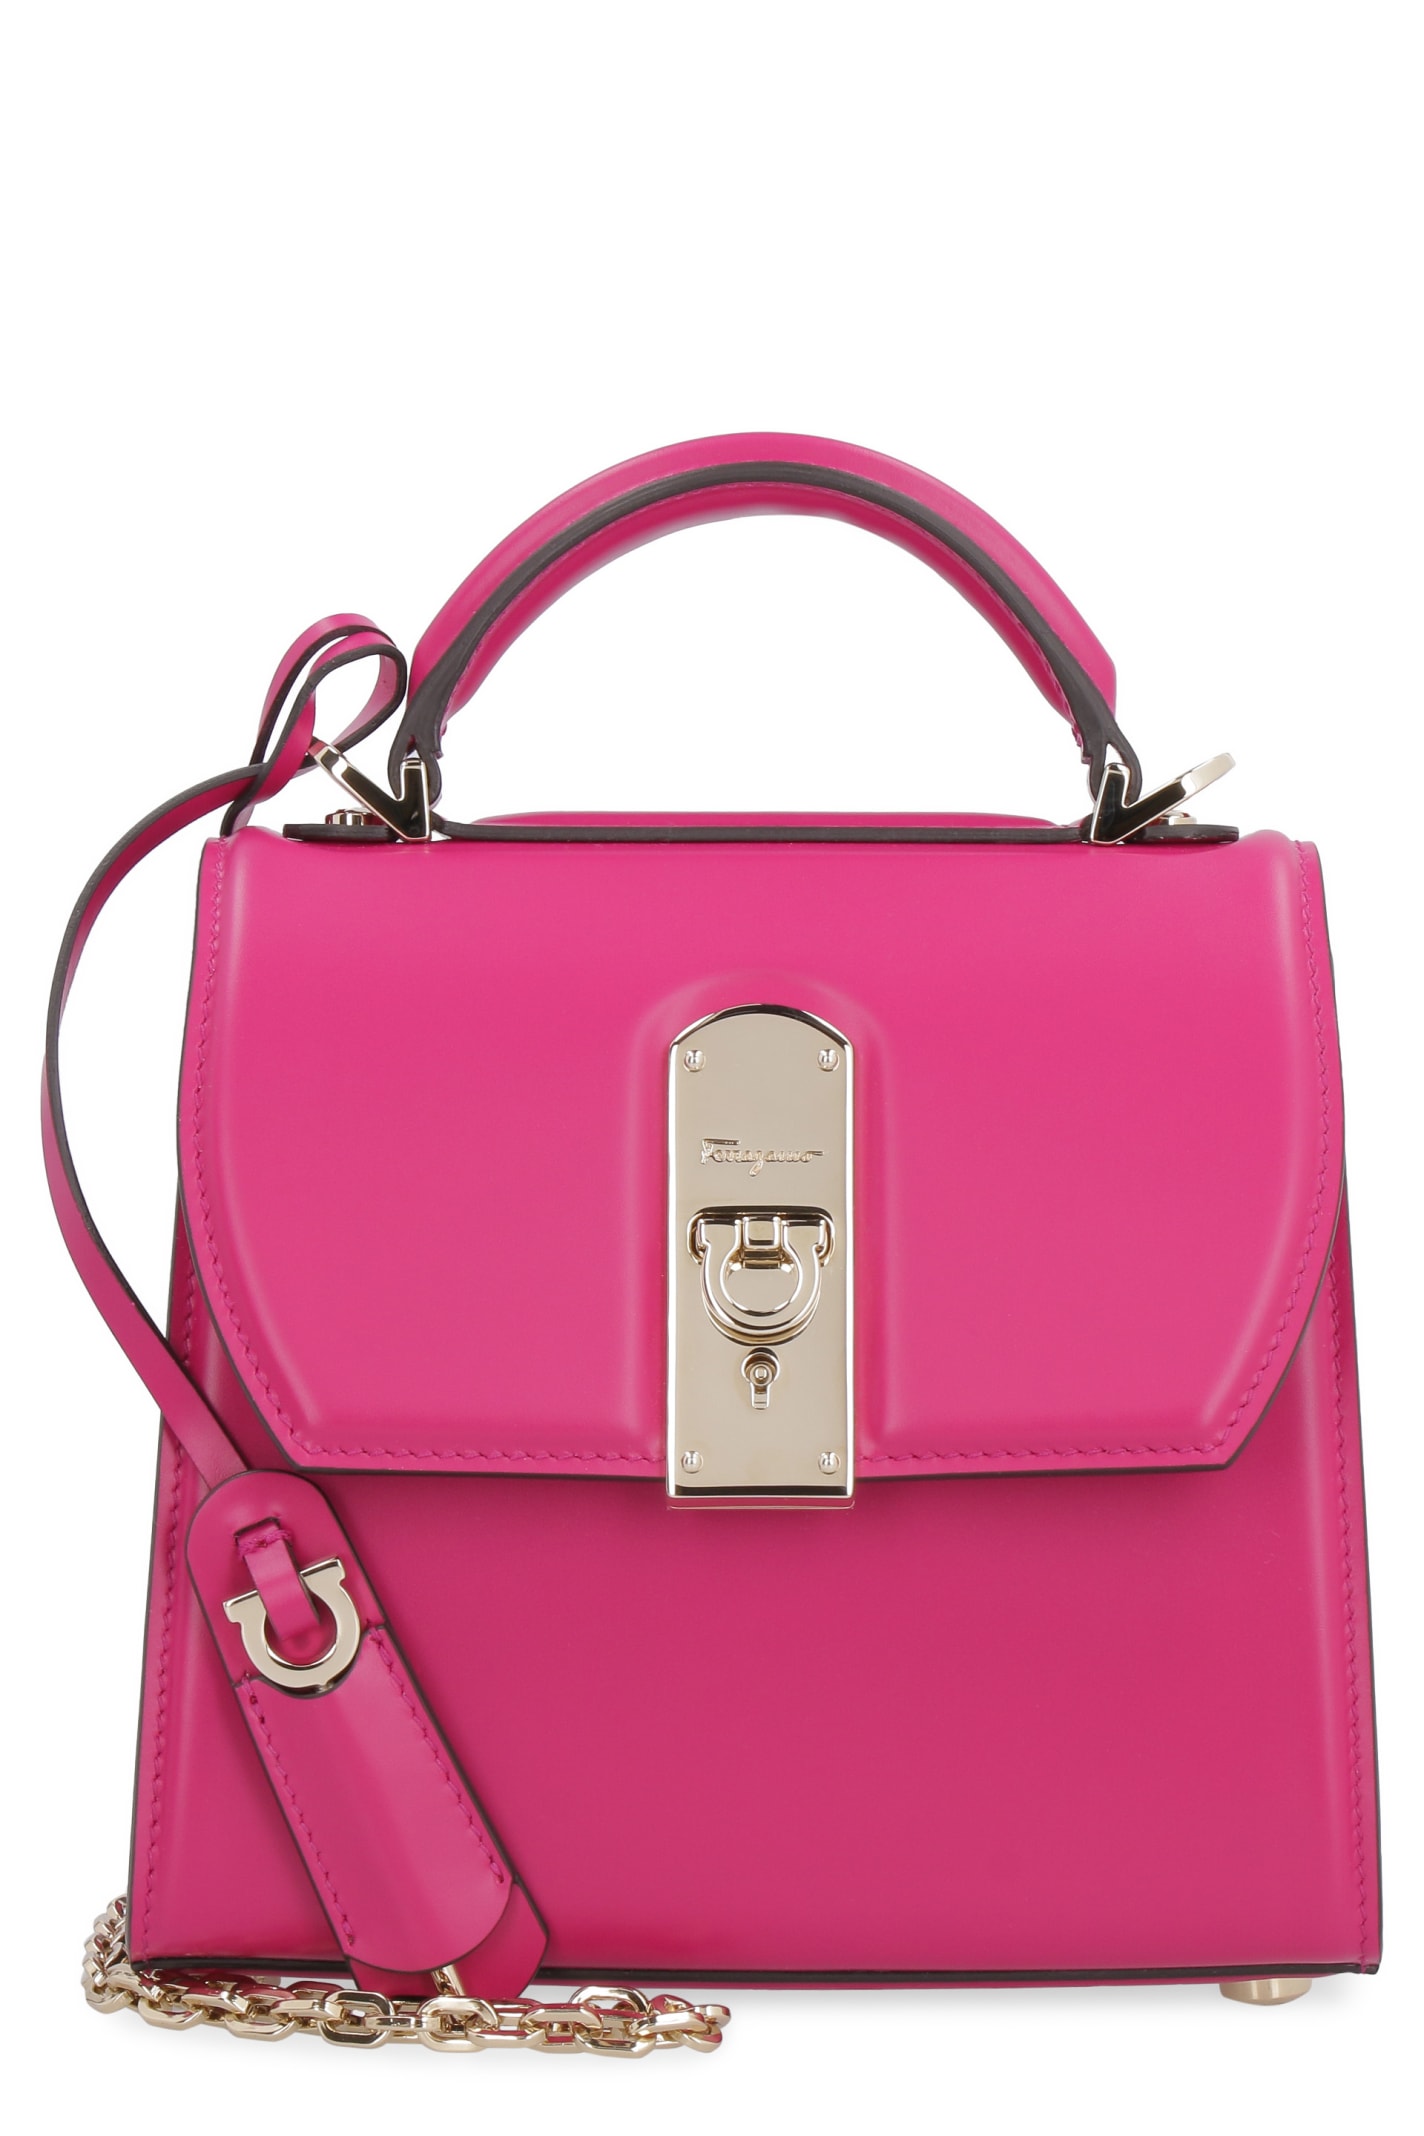 Salvatore Ferragamo Leather Handbag In Fuchsia | ModeSens